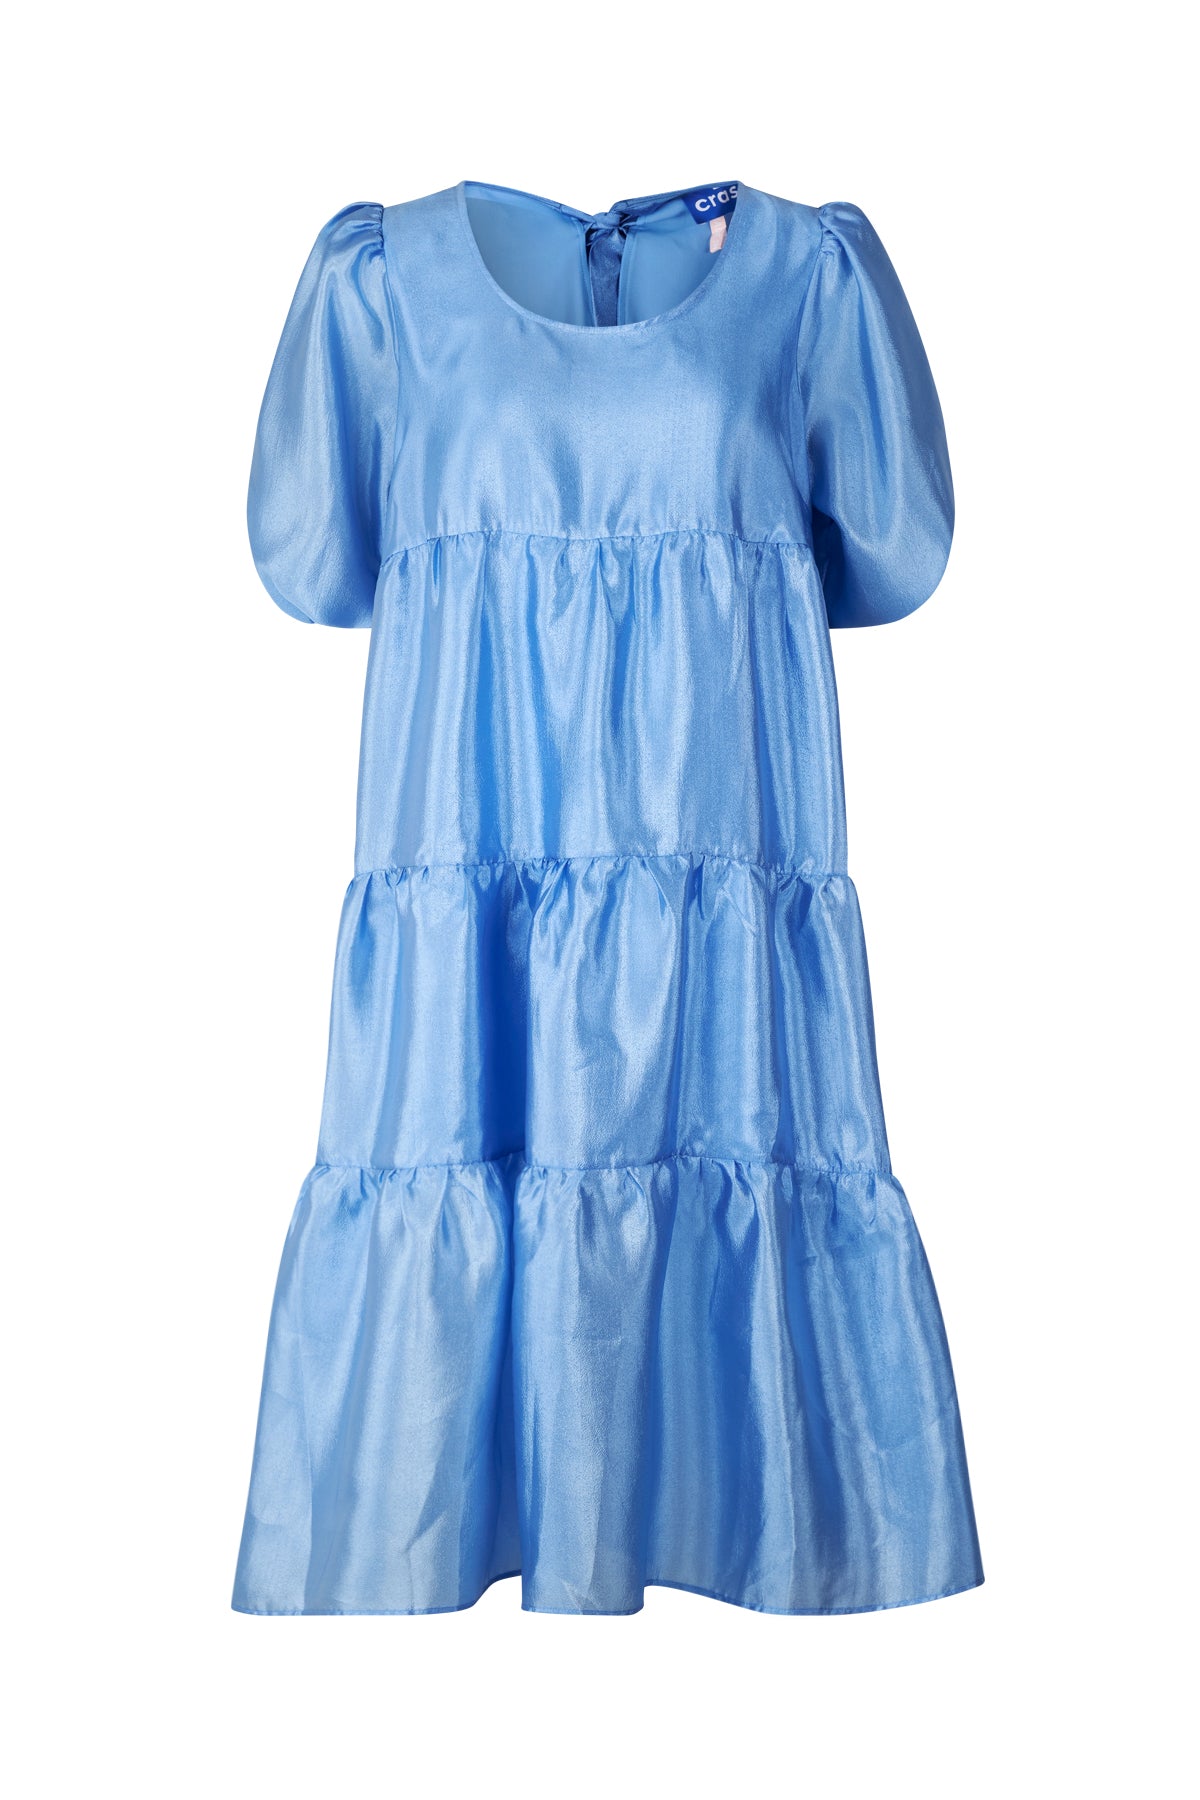 CRAS Lyra Dress Dress Vista Blue